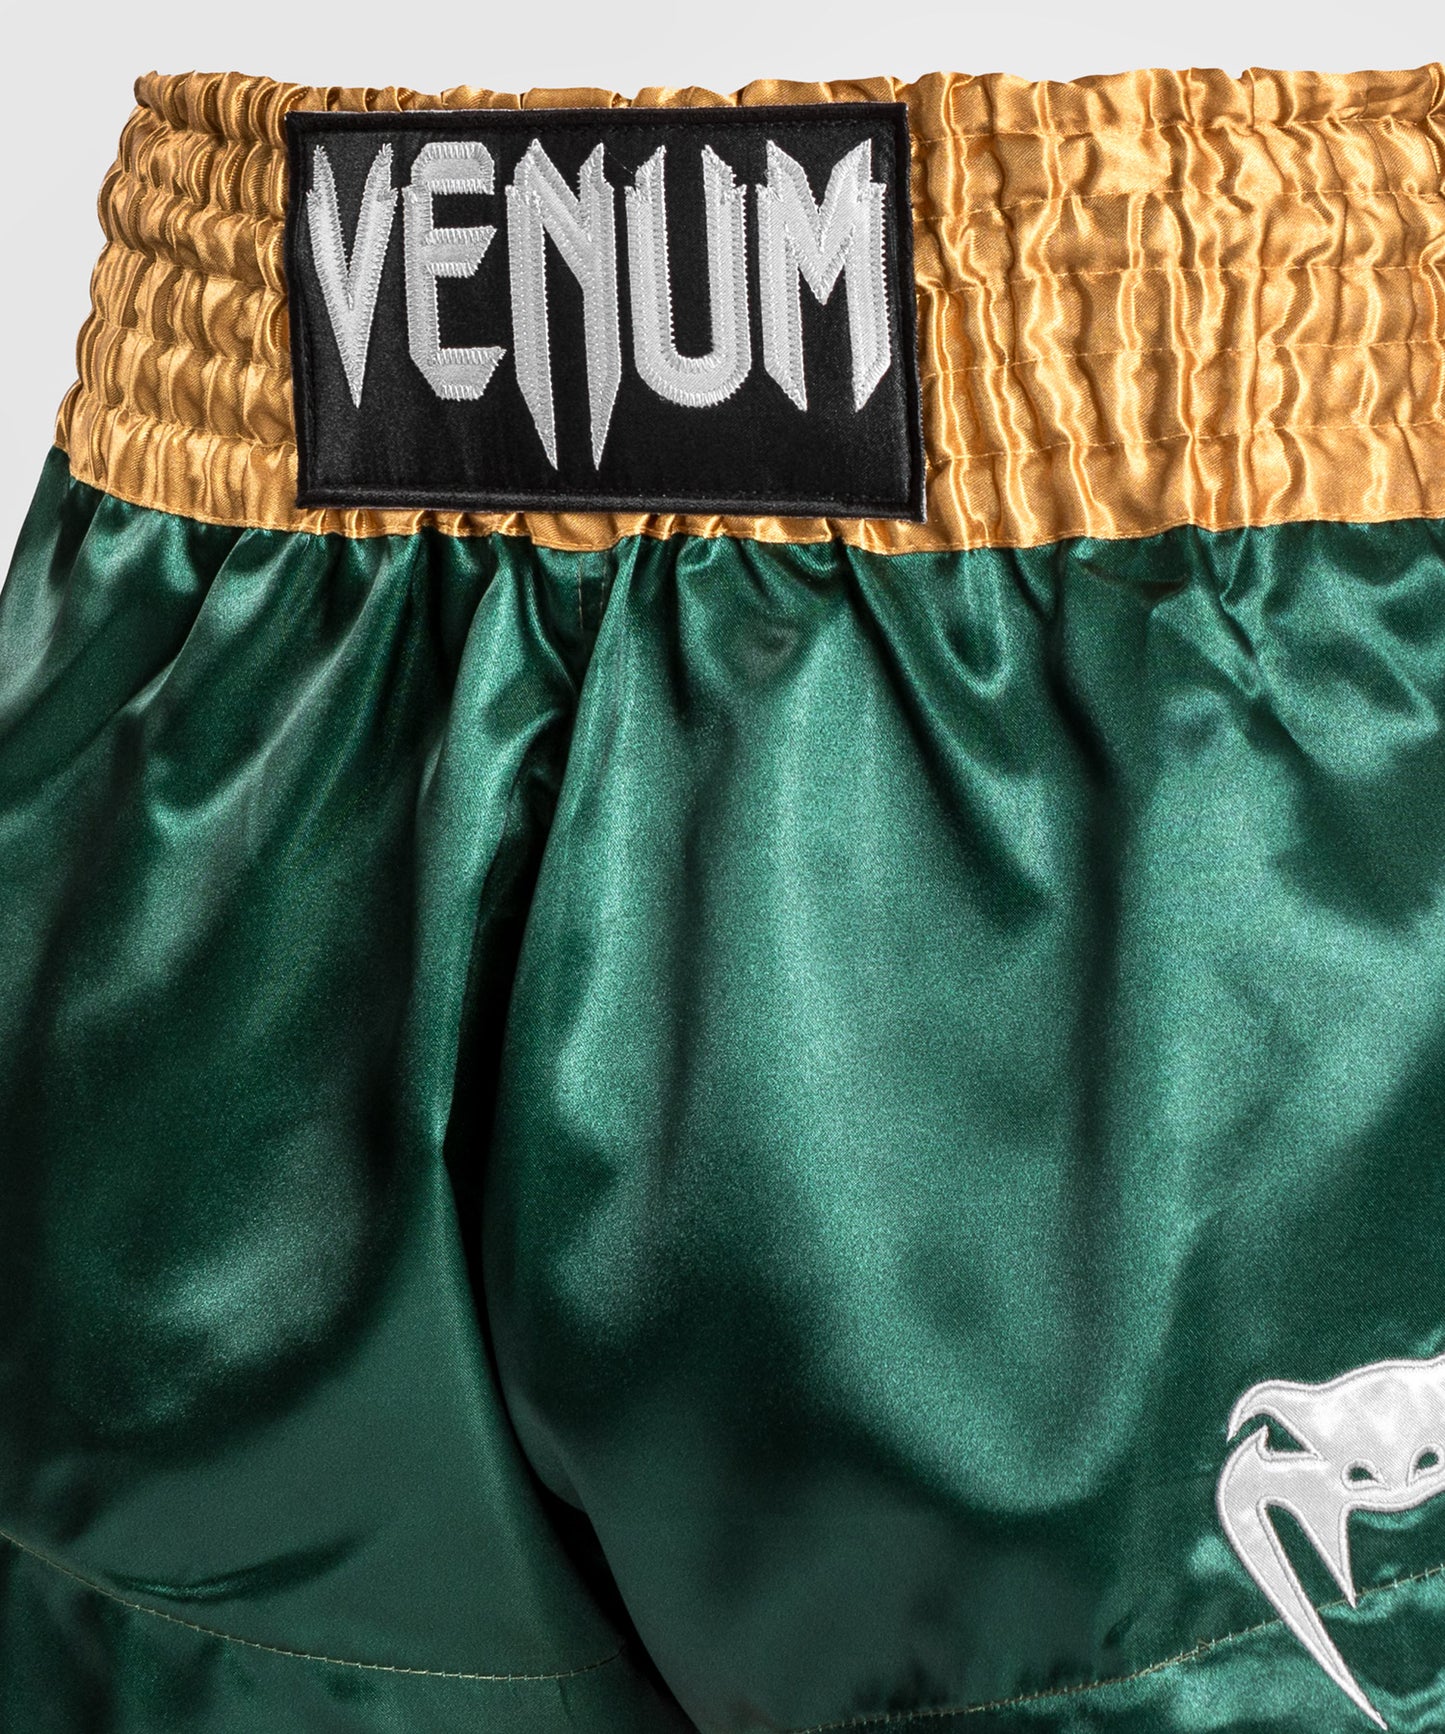 Venum Classic - Muay Thai Short - Verde/Dorado/Blanco